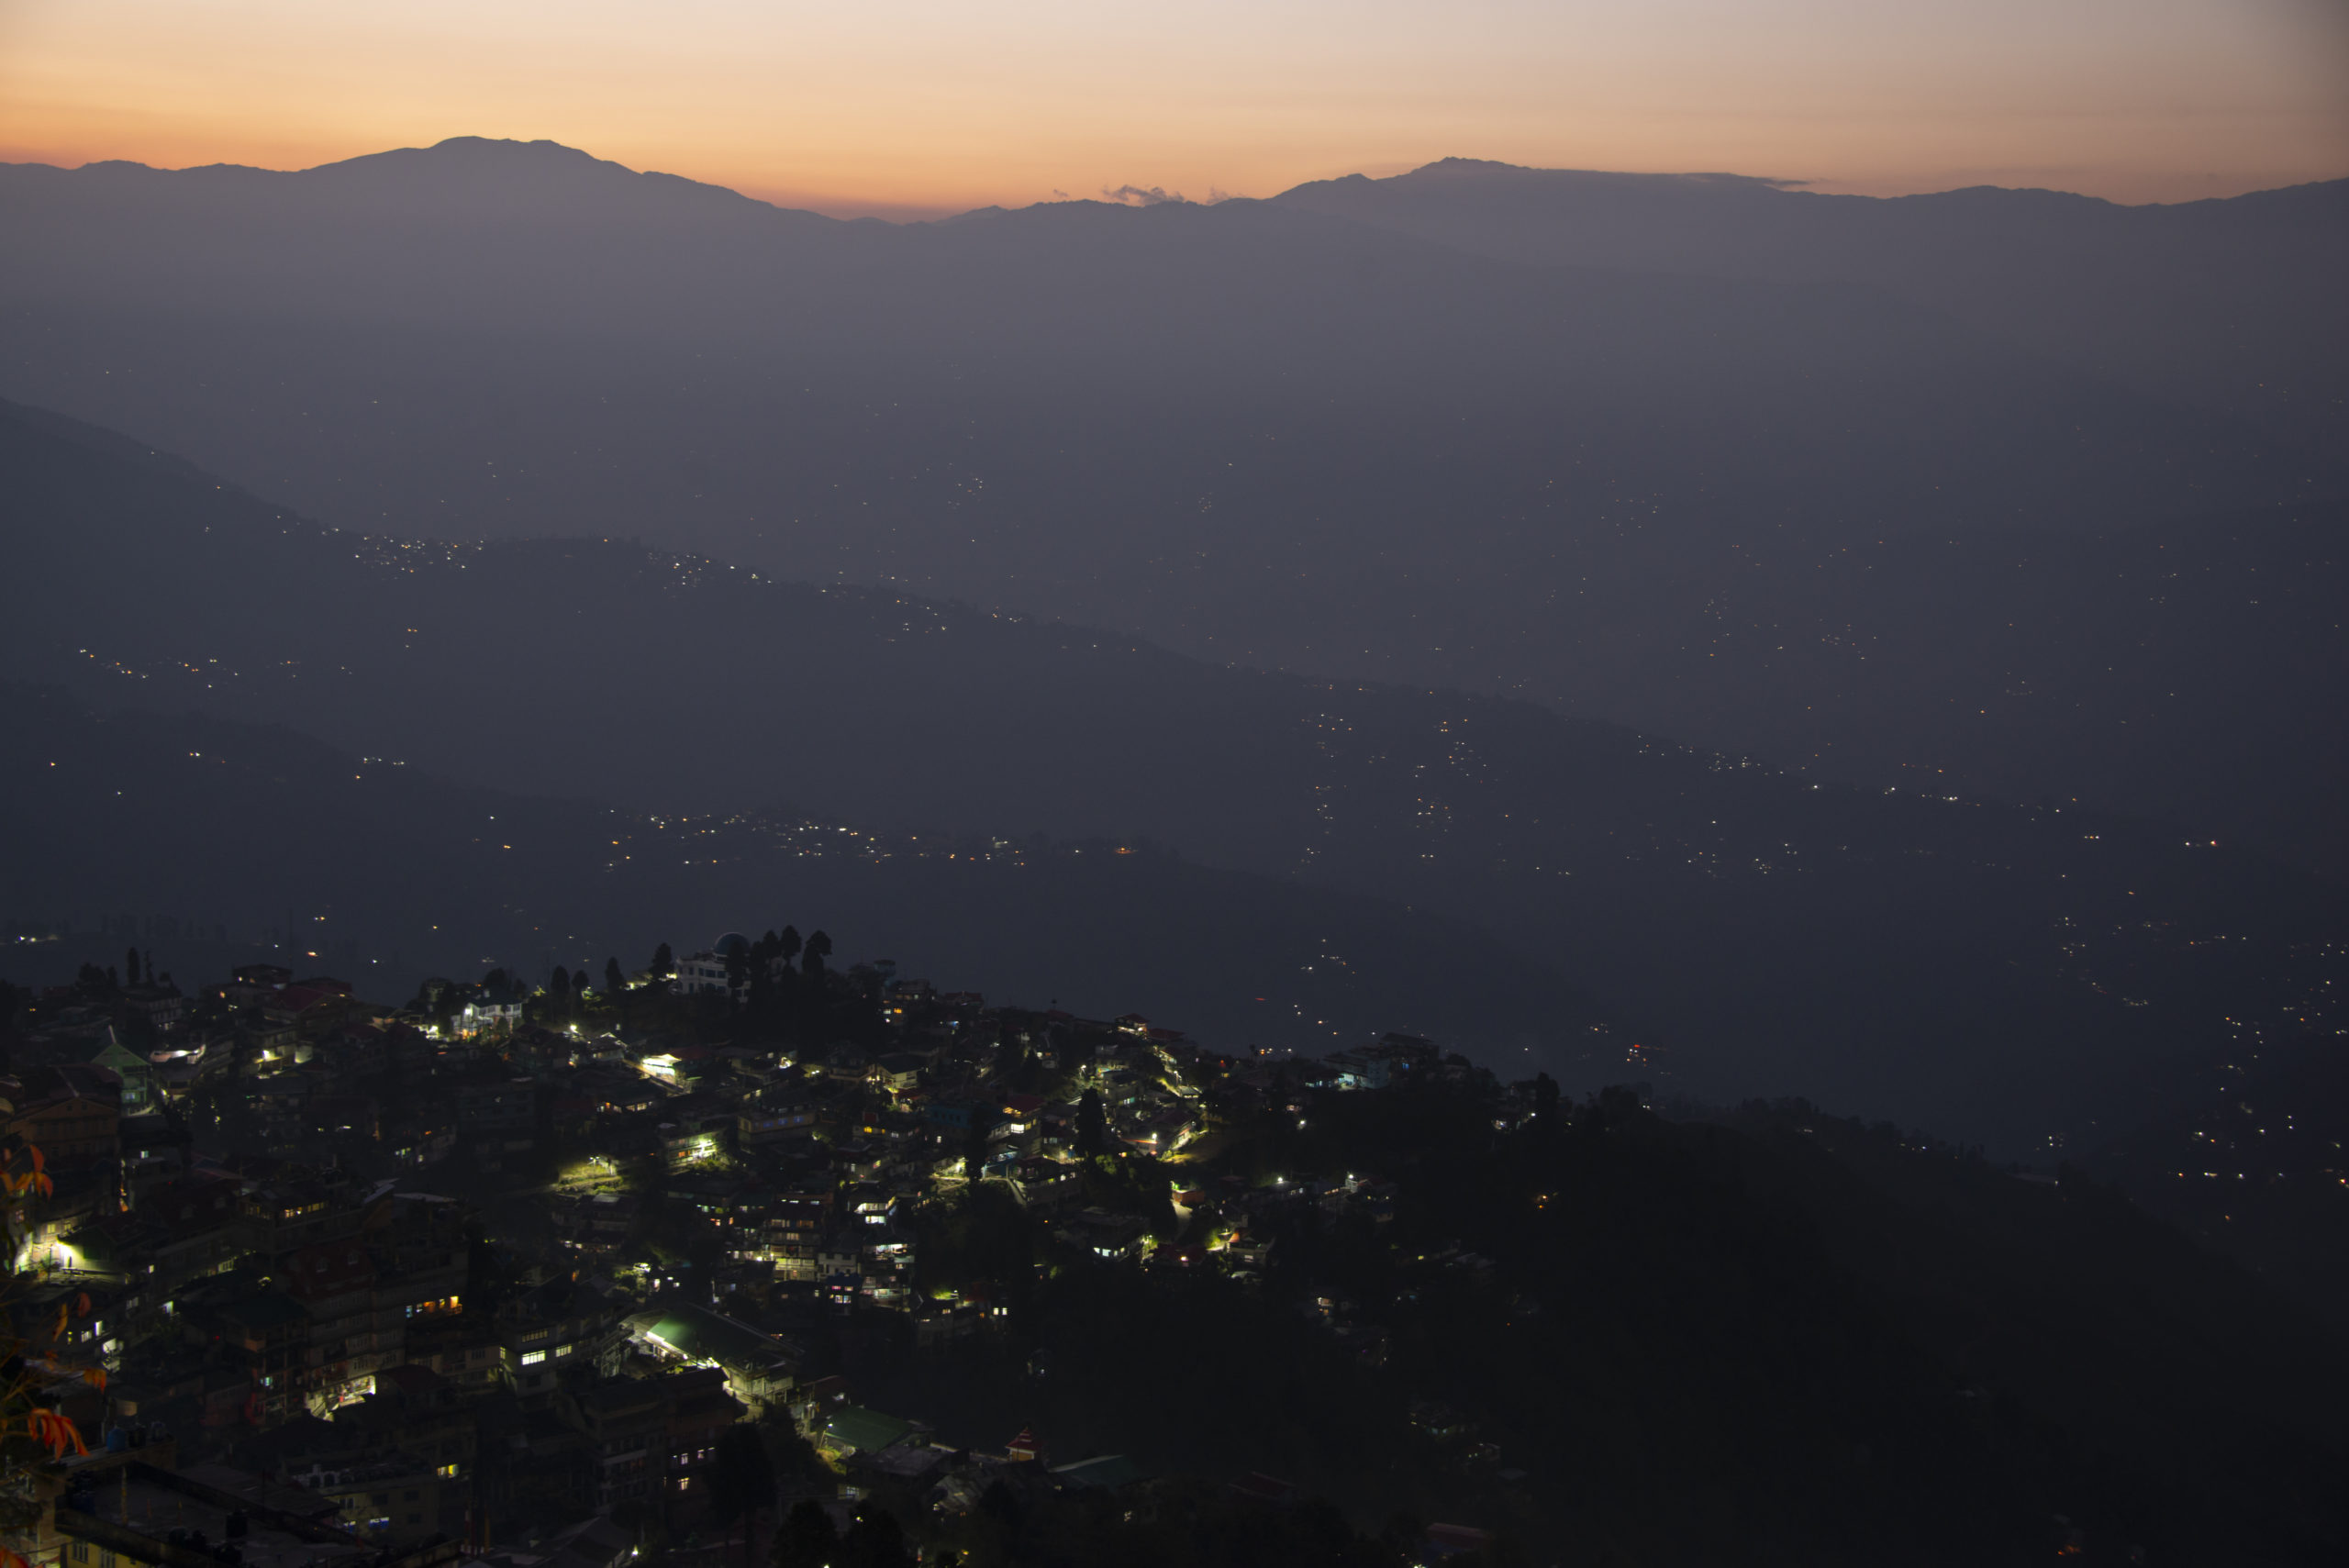 Twilight at Darjeeling